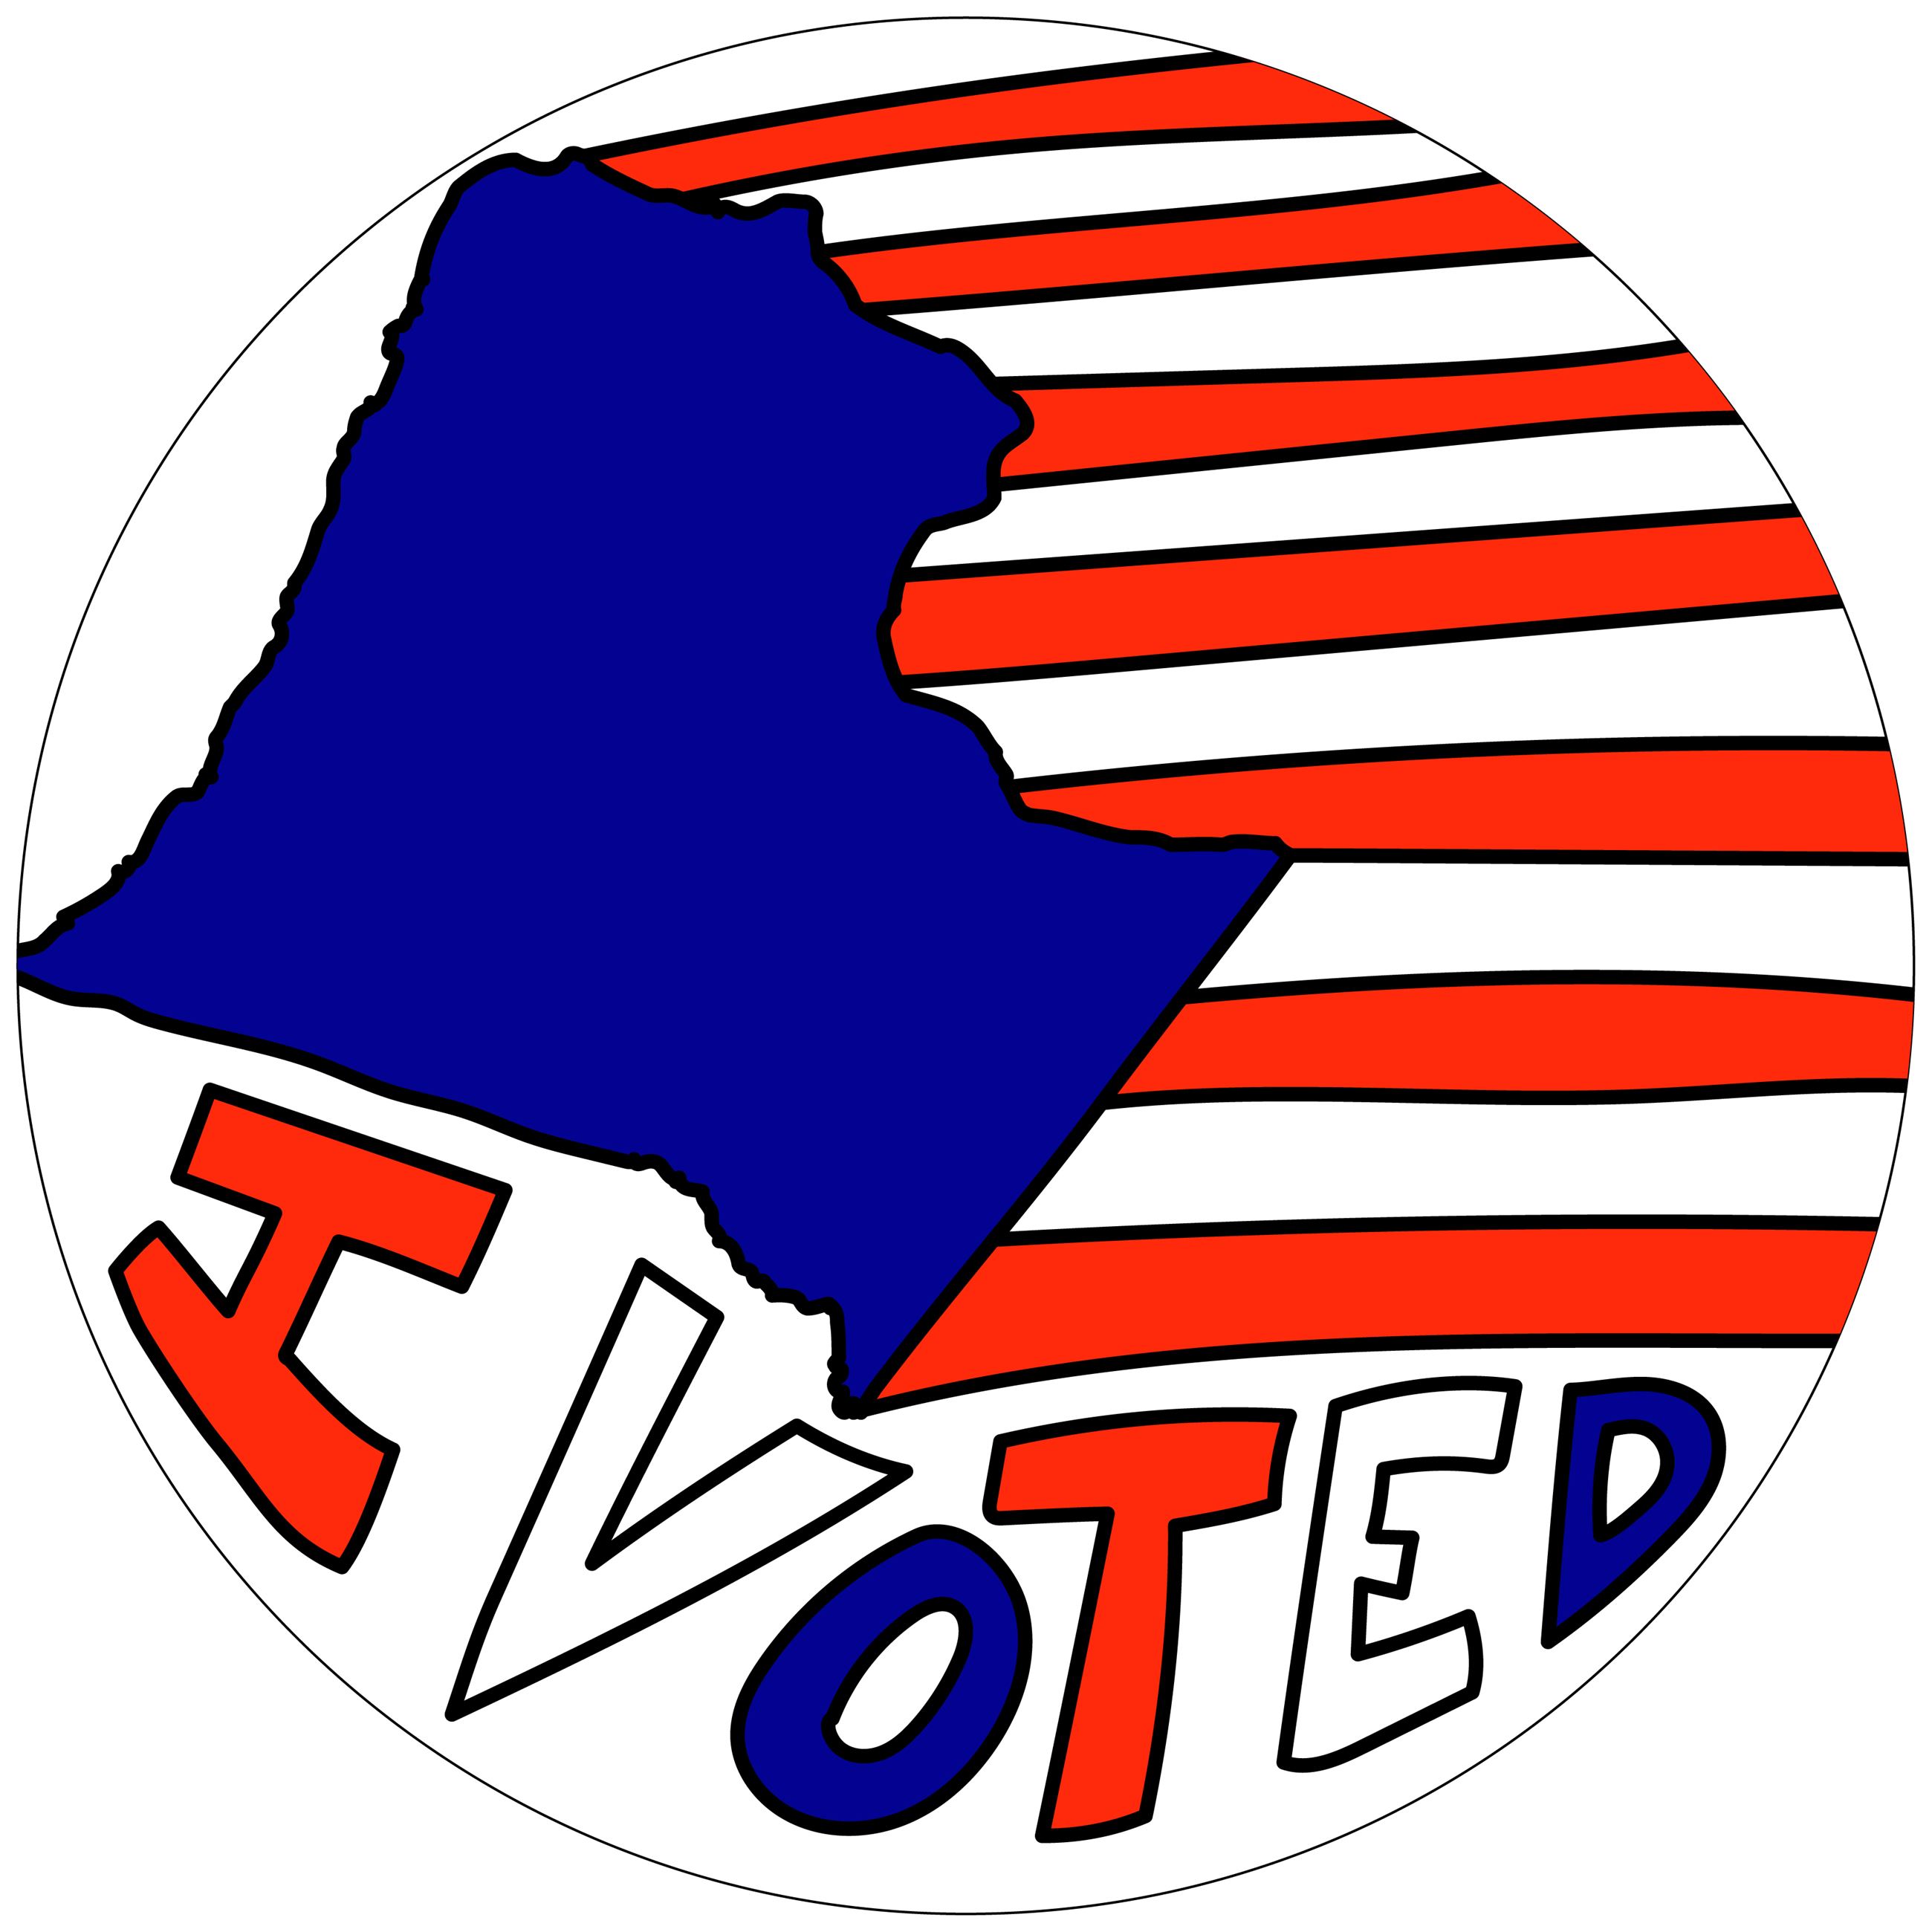 Image of finalist for 'I Voted' sticker design